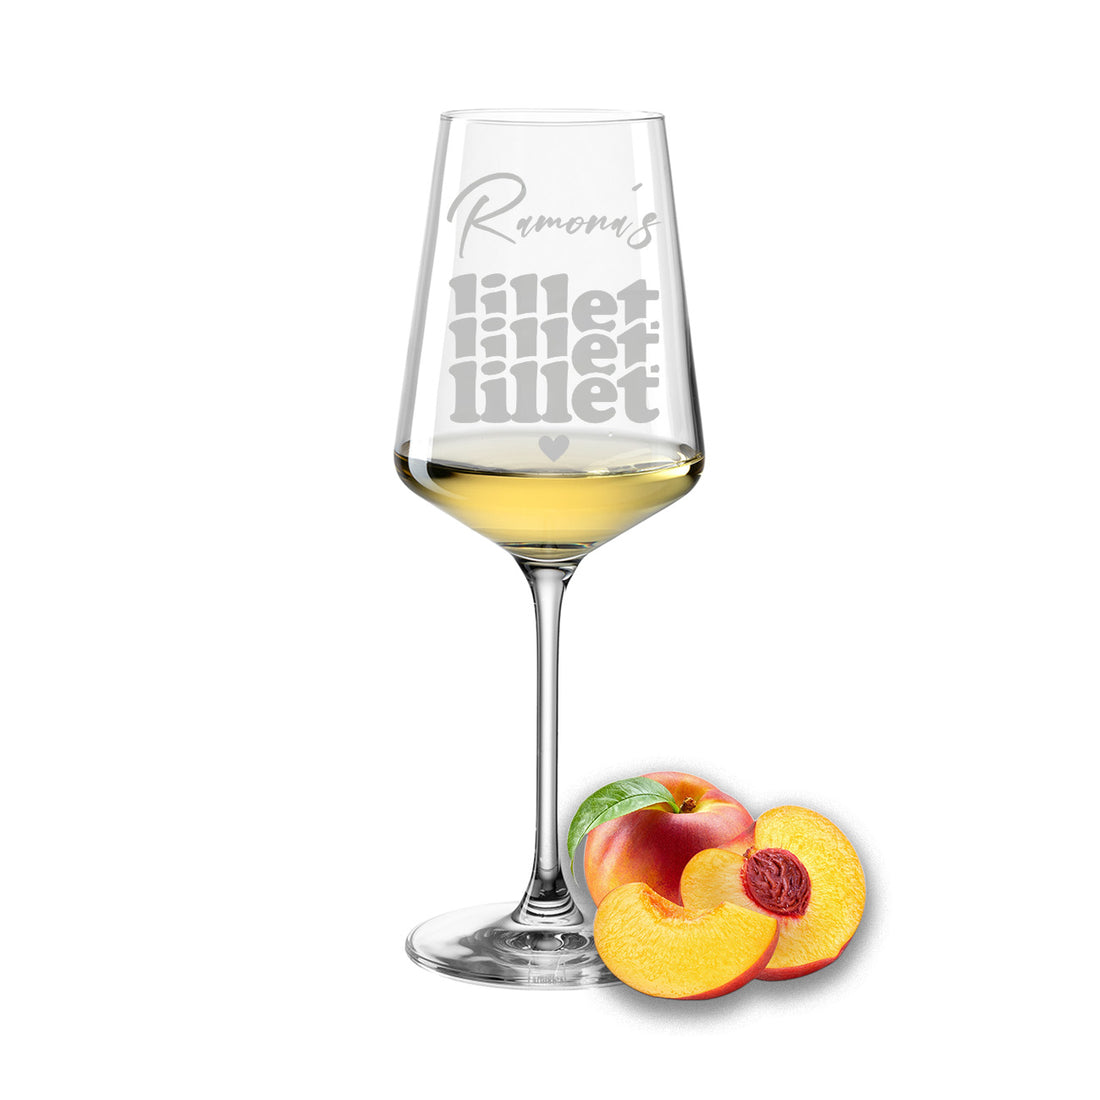 Weinglas mit Gravur Leonardo Puccini "LILLET LILLET LILLET" mit Wunschname